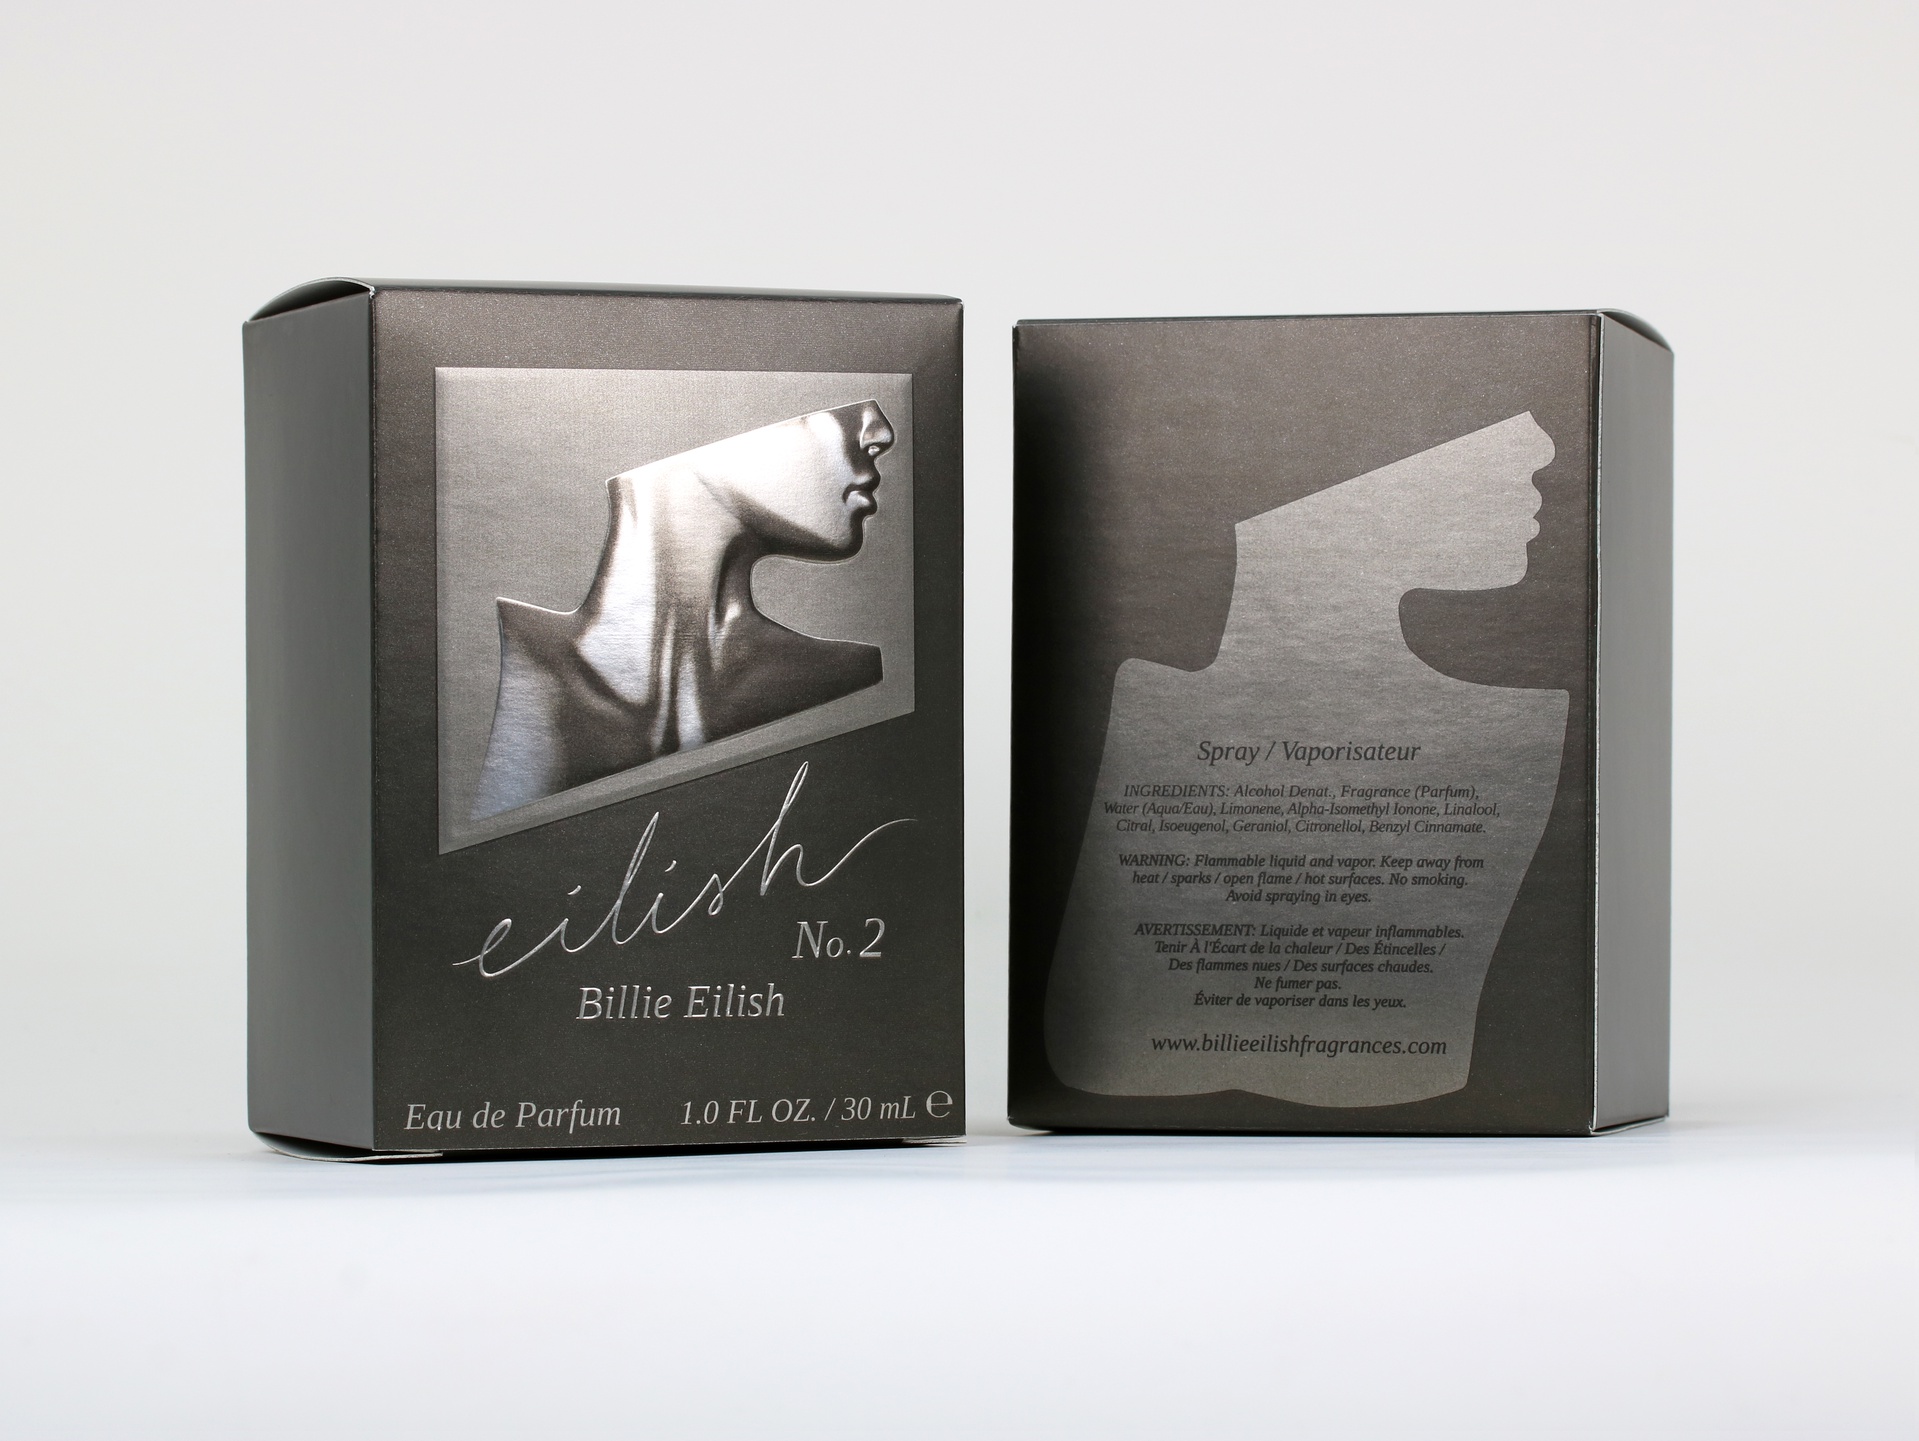 Eilish No. 2 packaging